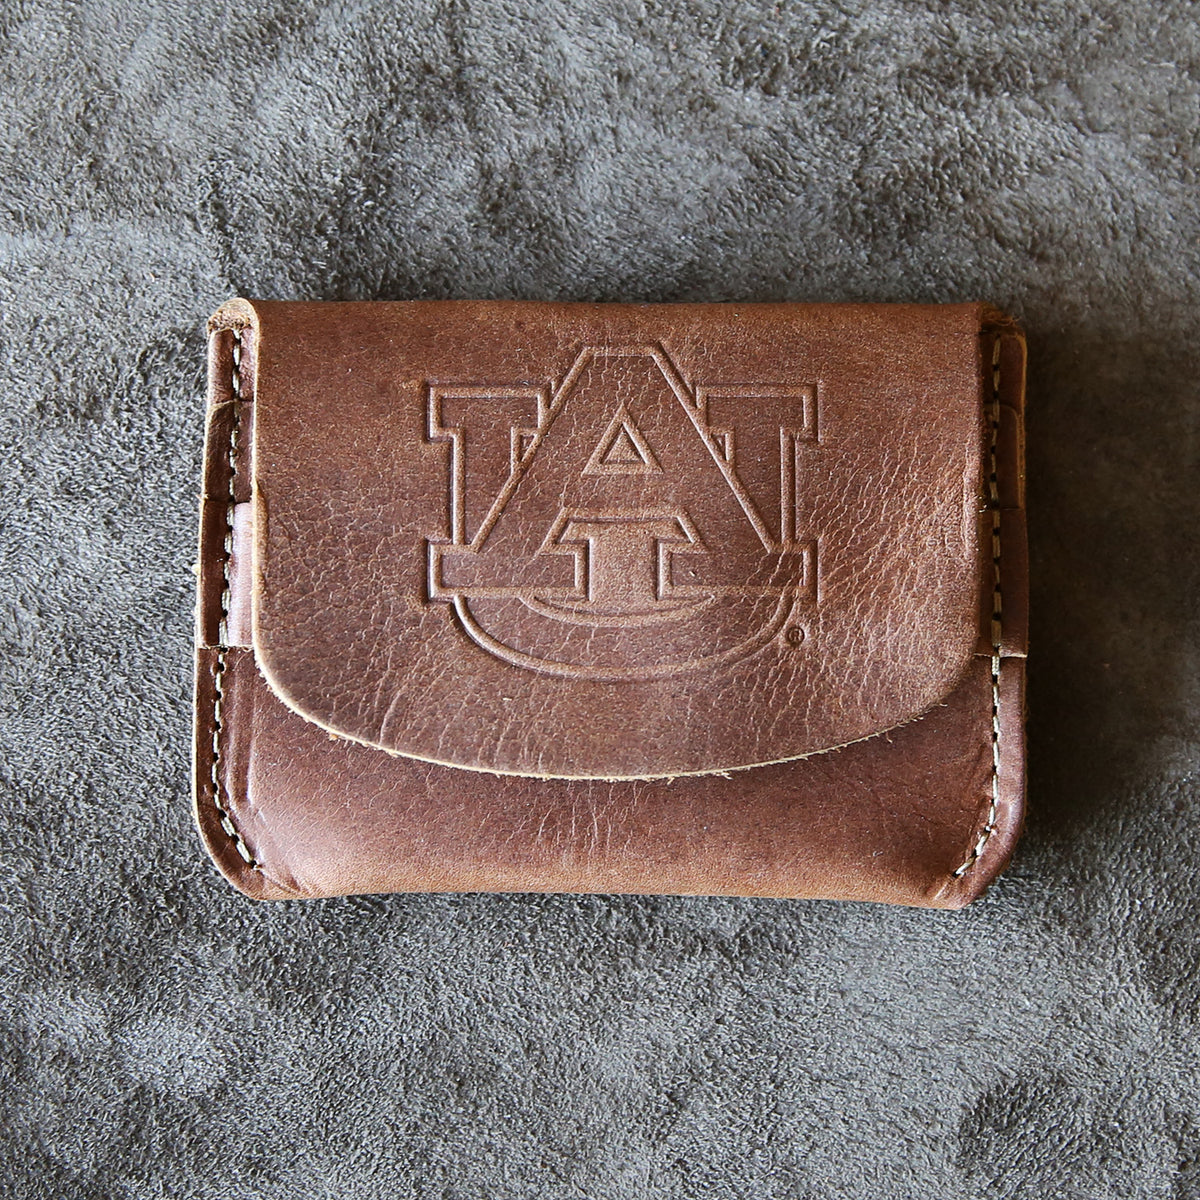 Fine leather front pocket wallet with Auburn University logo